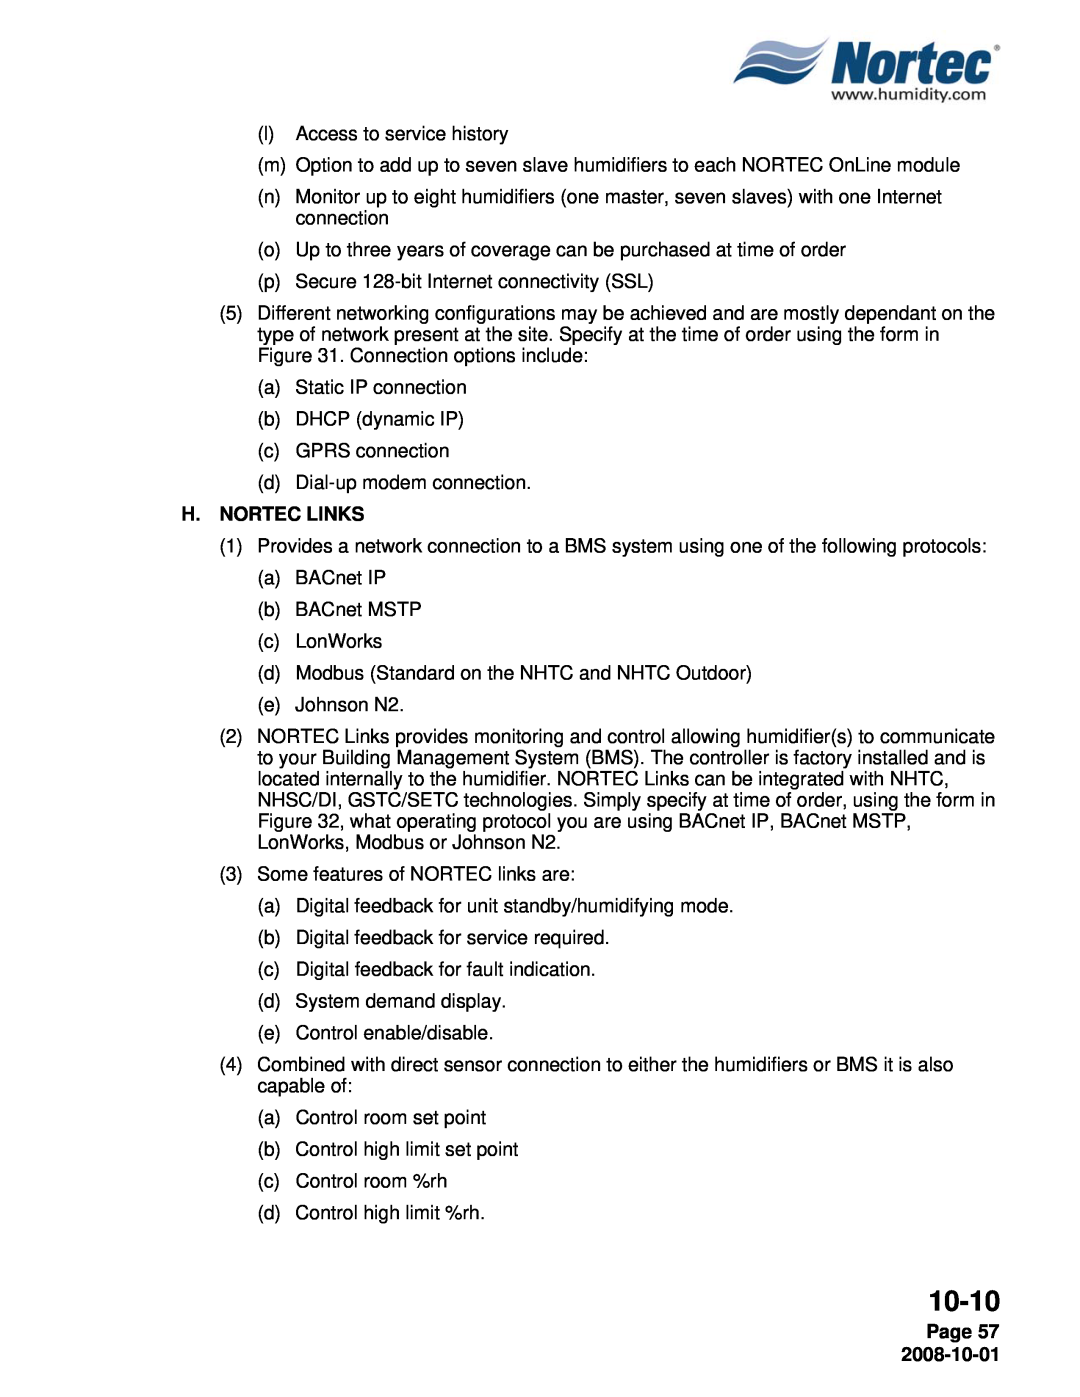 Nortec NHTC, NHPC manual 10-10, H. Nortec Links, Page 57 